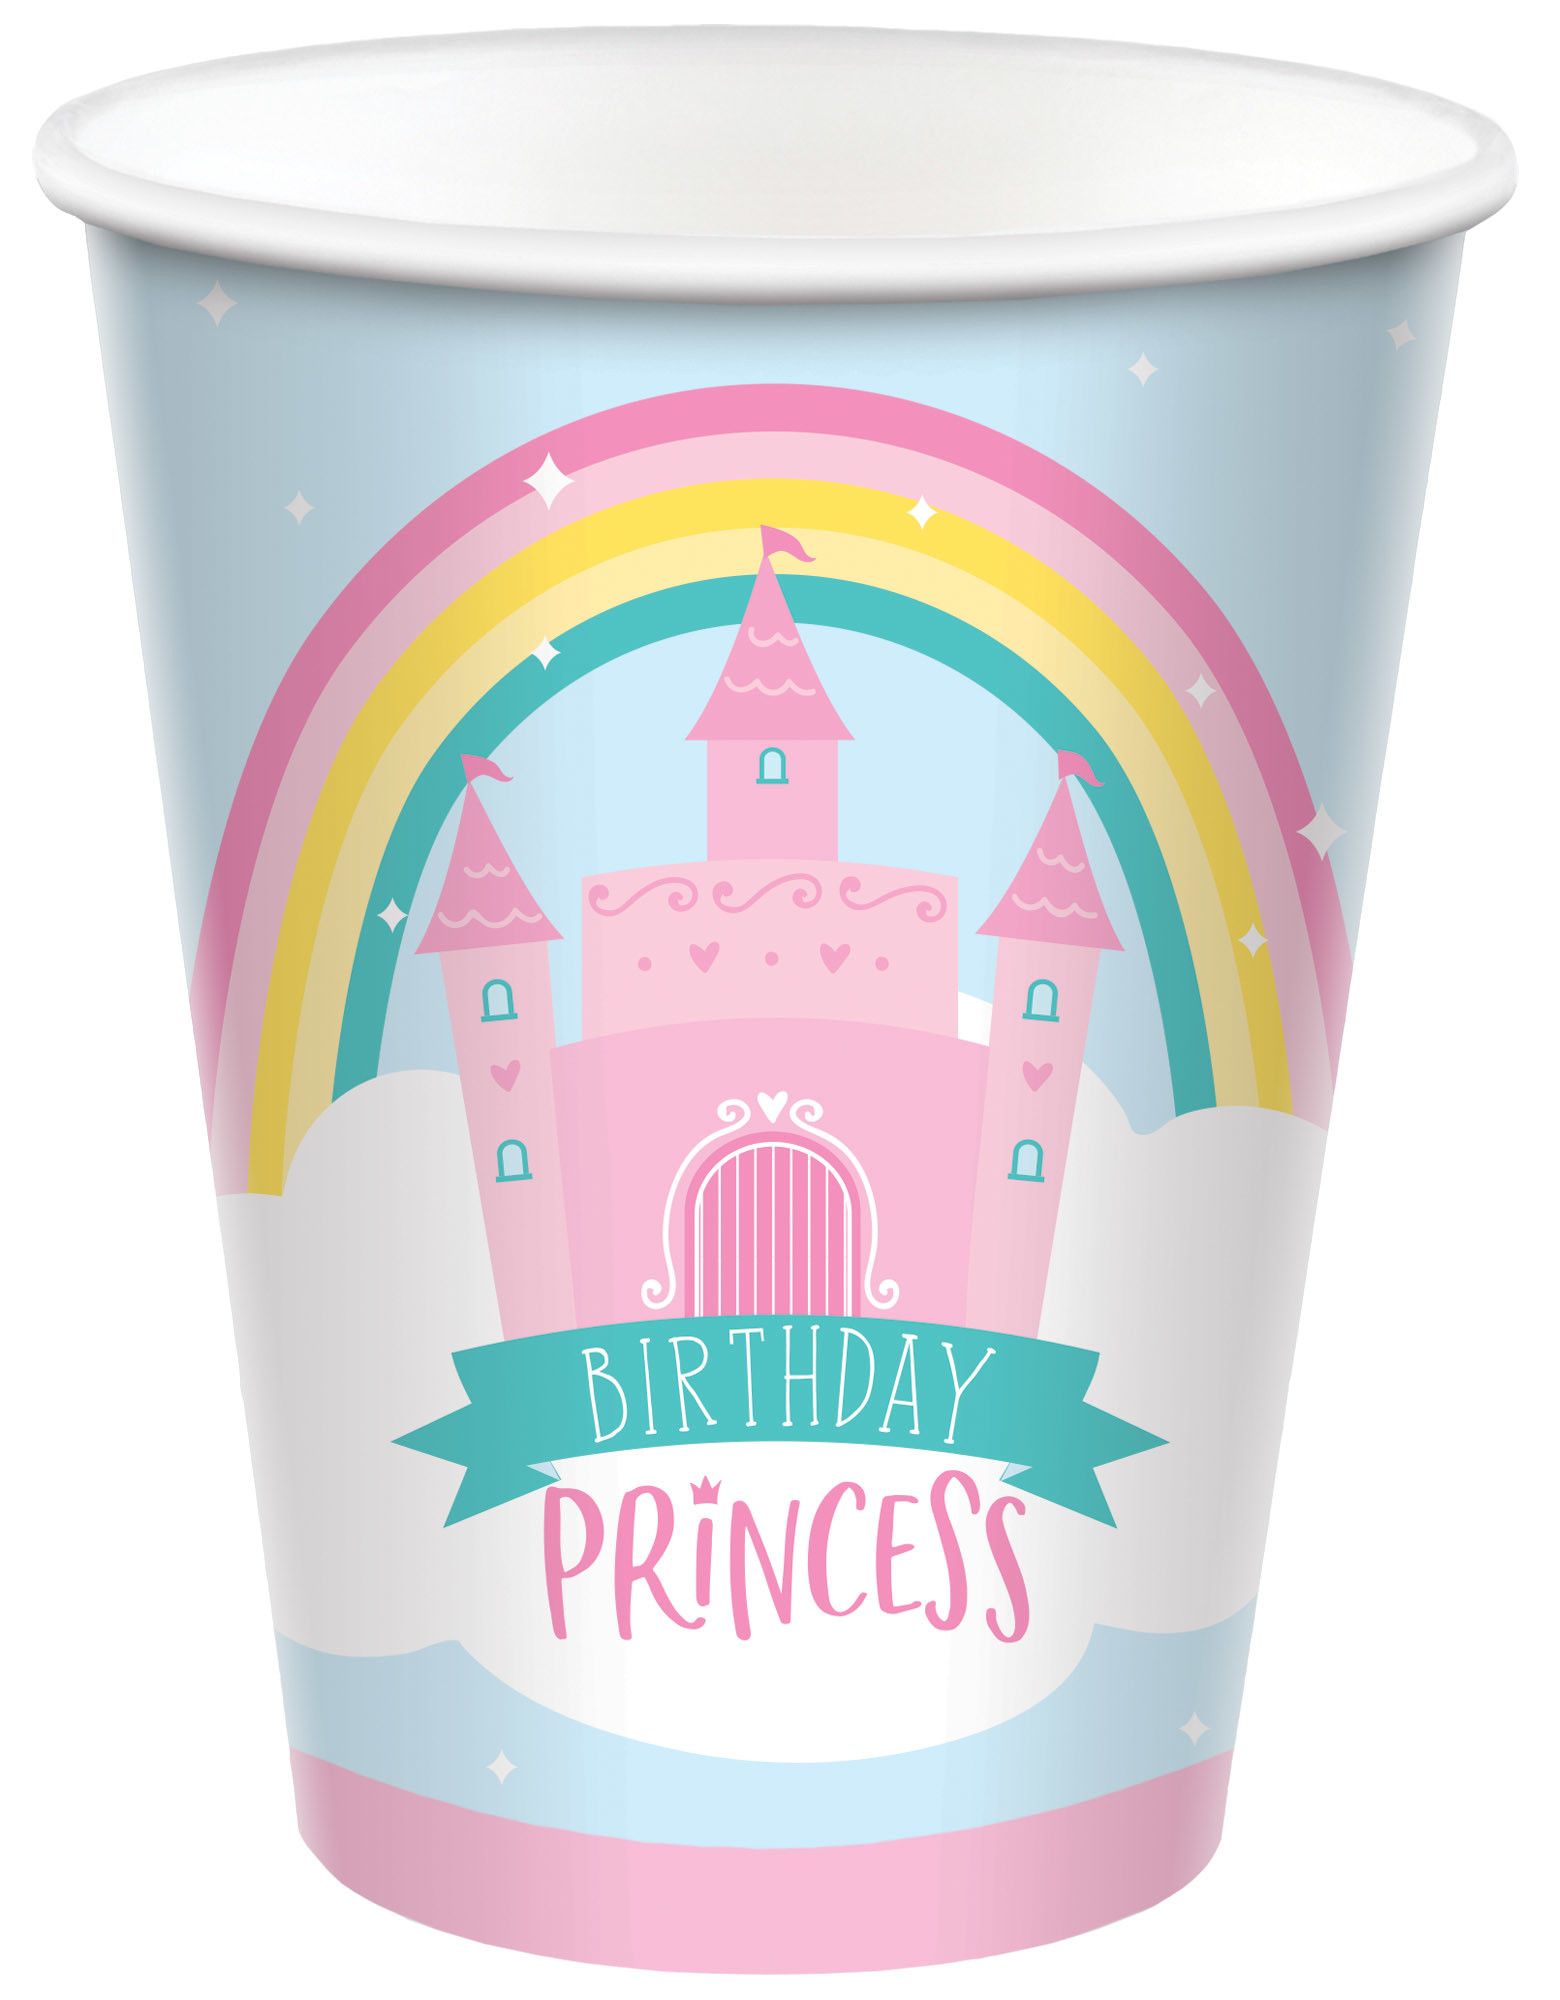 Princess Castle Birthday 9 oz Paper Cups, 8ct